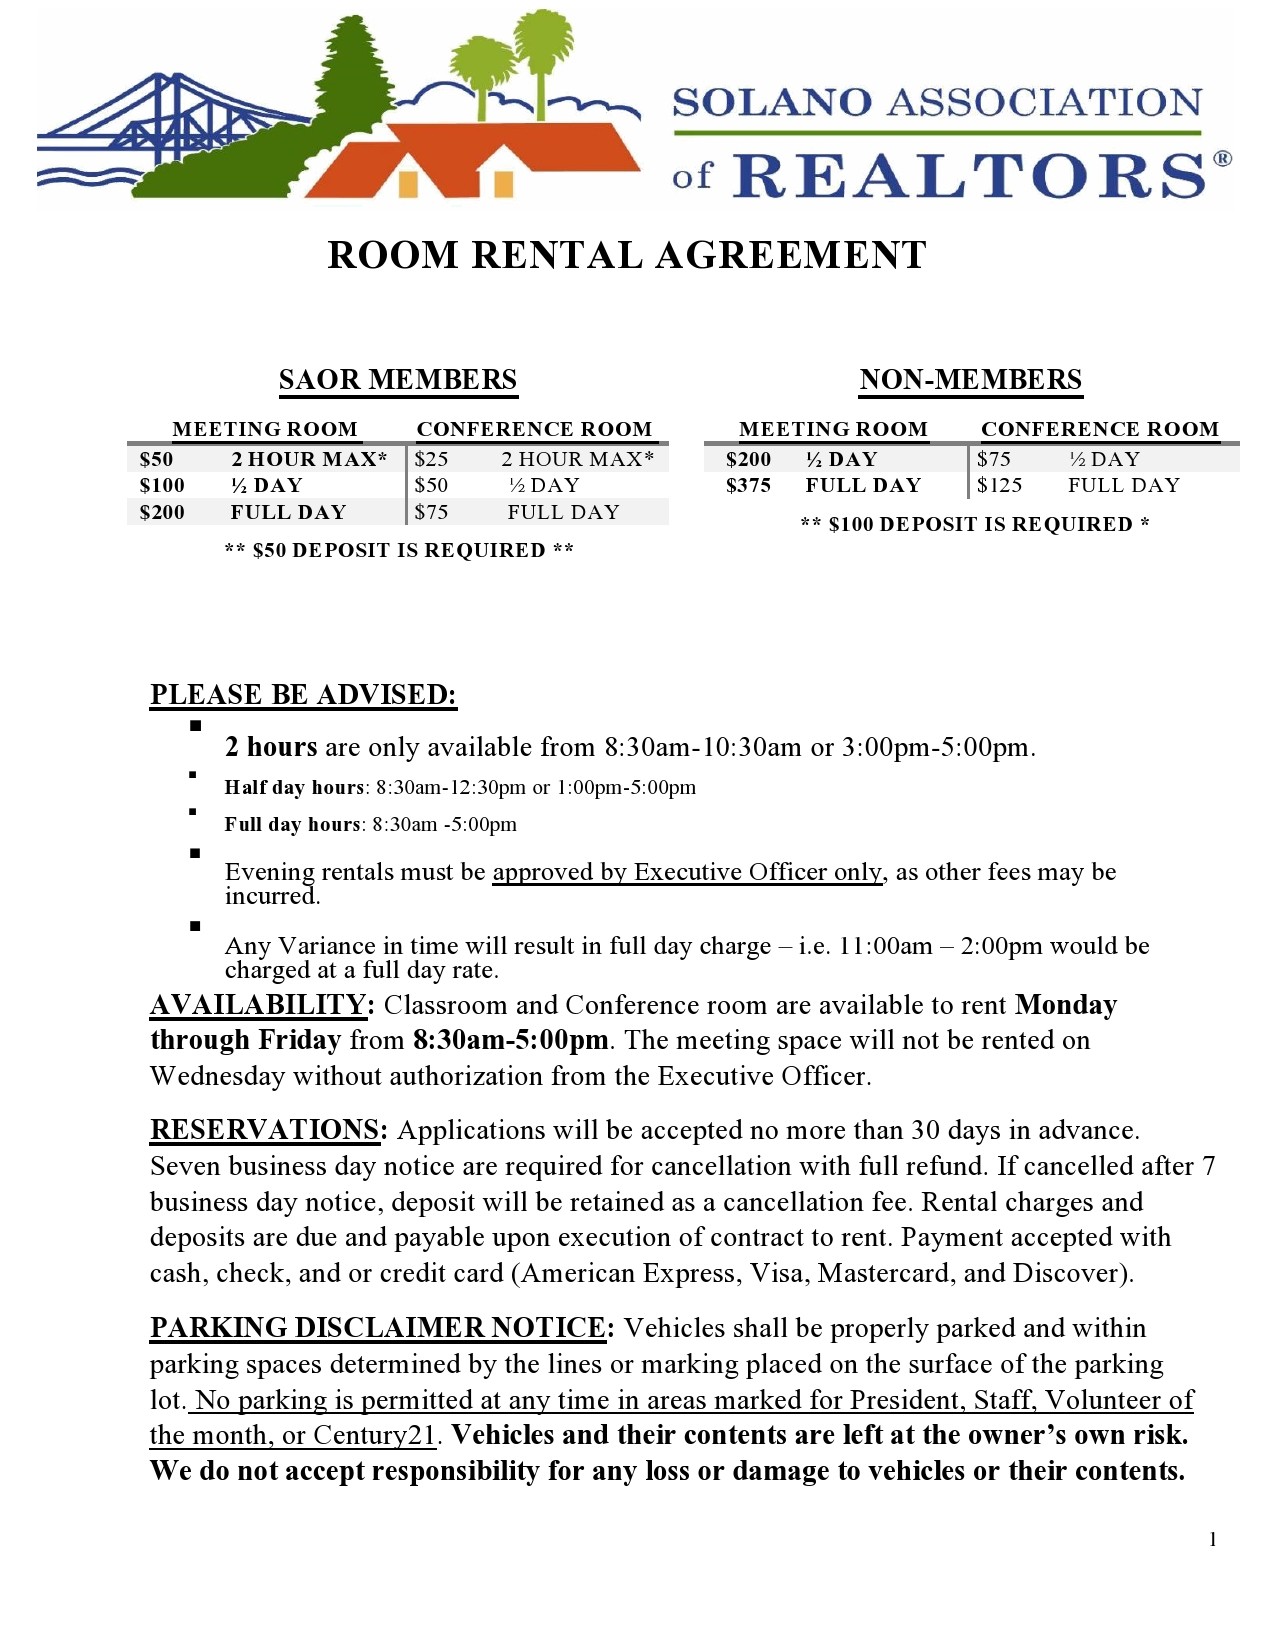 Free room rental agreement 12